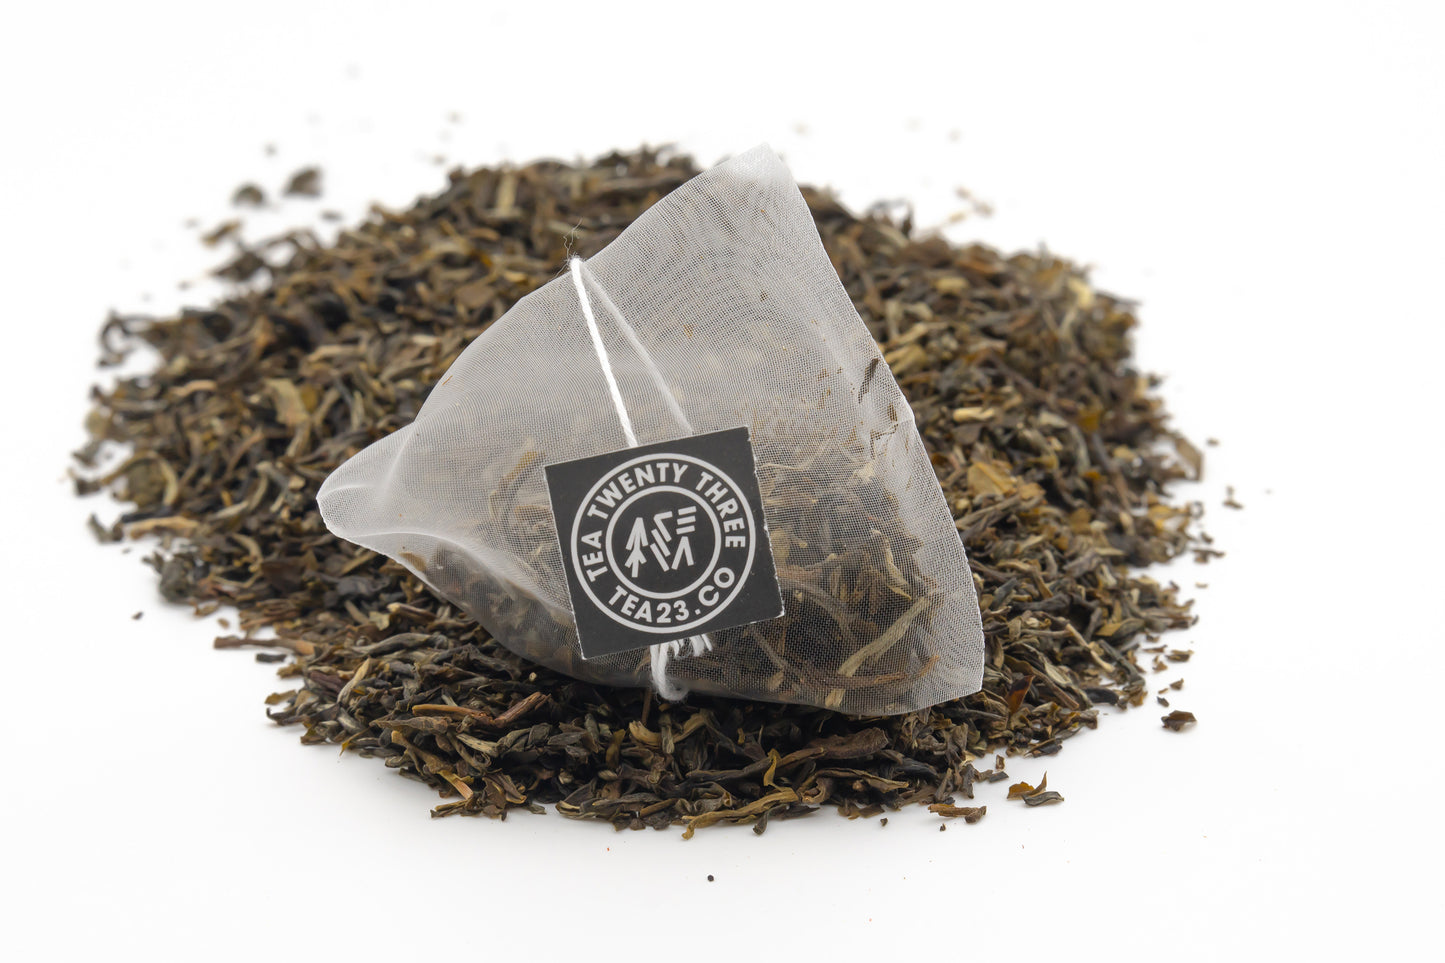 Yunnan Green tea in a pyramid tea bag from Tea23